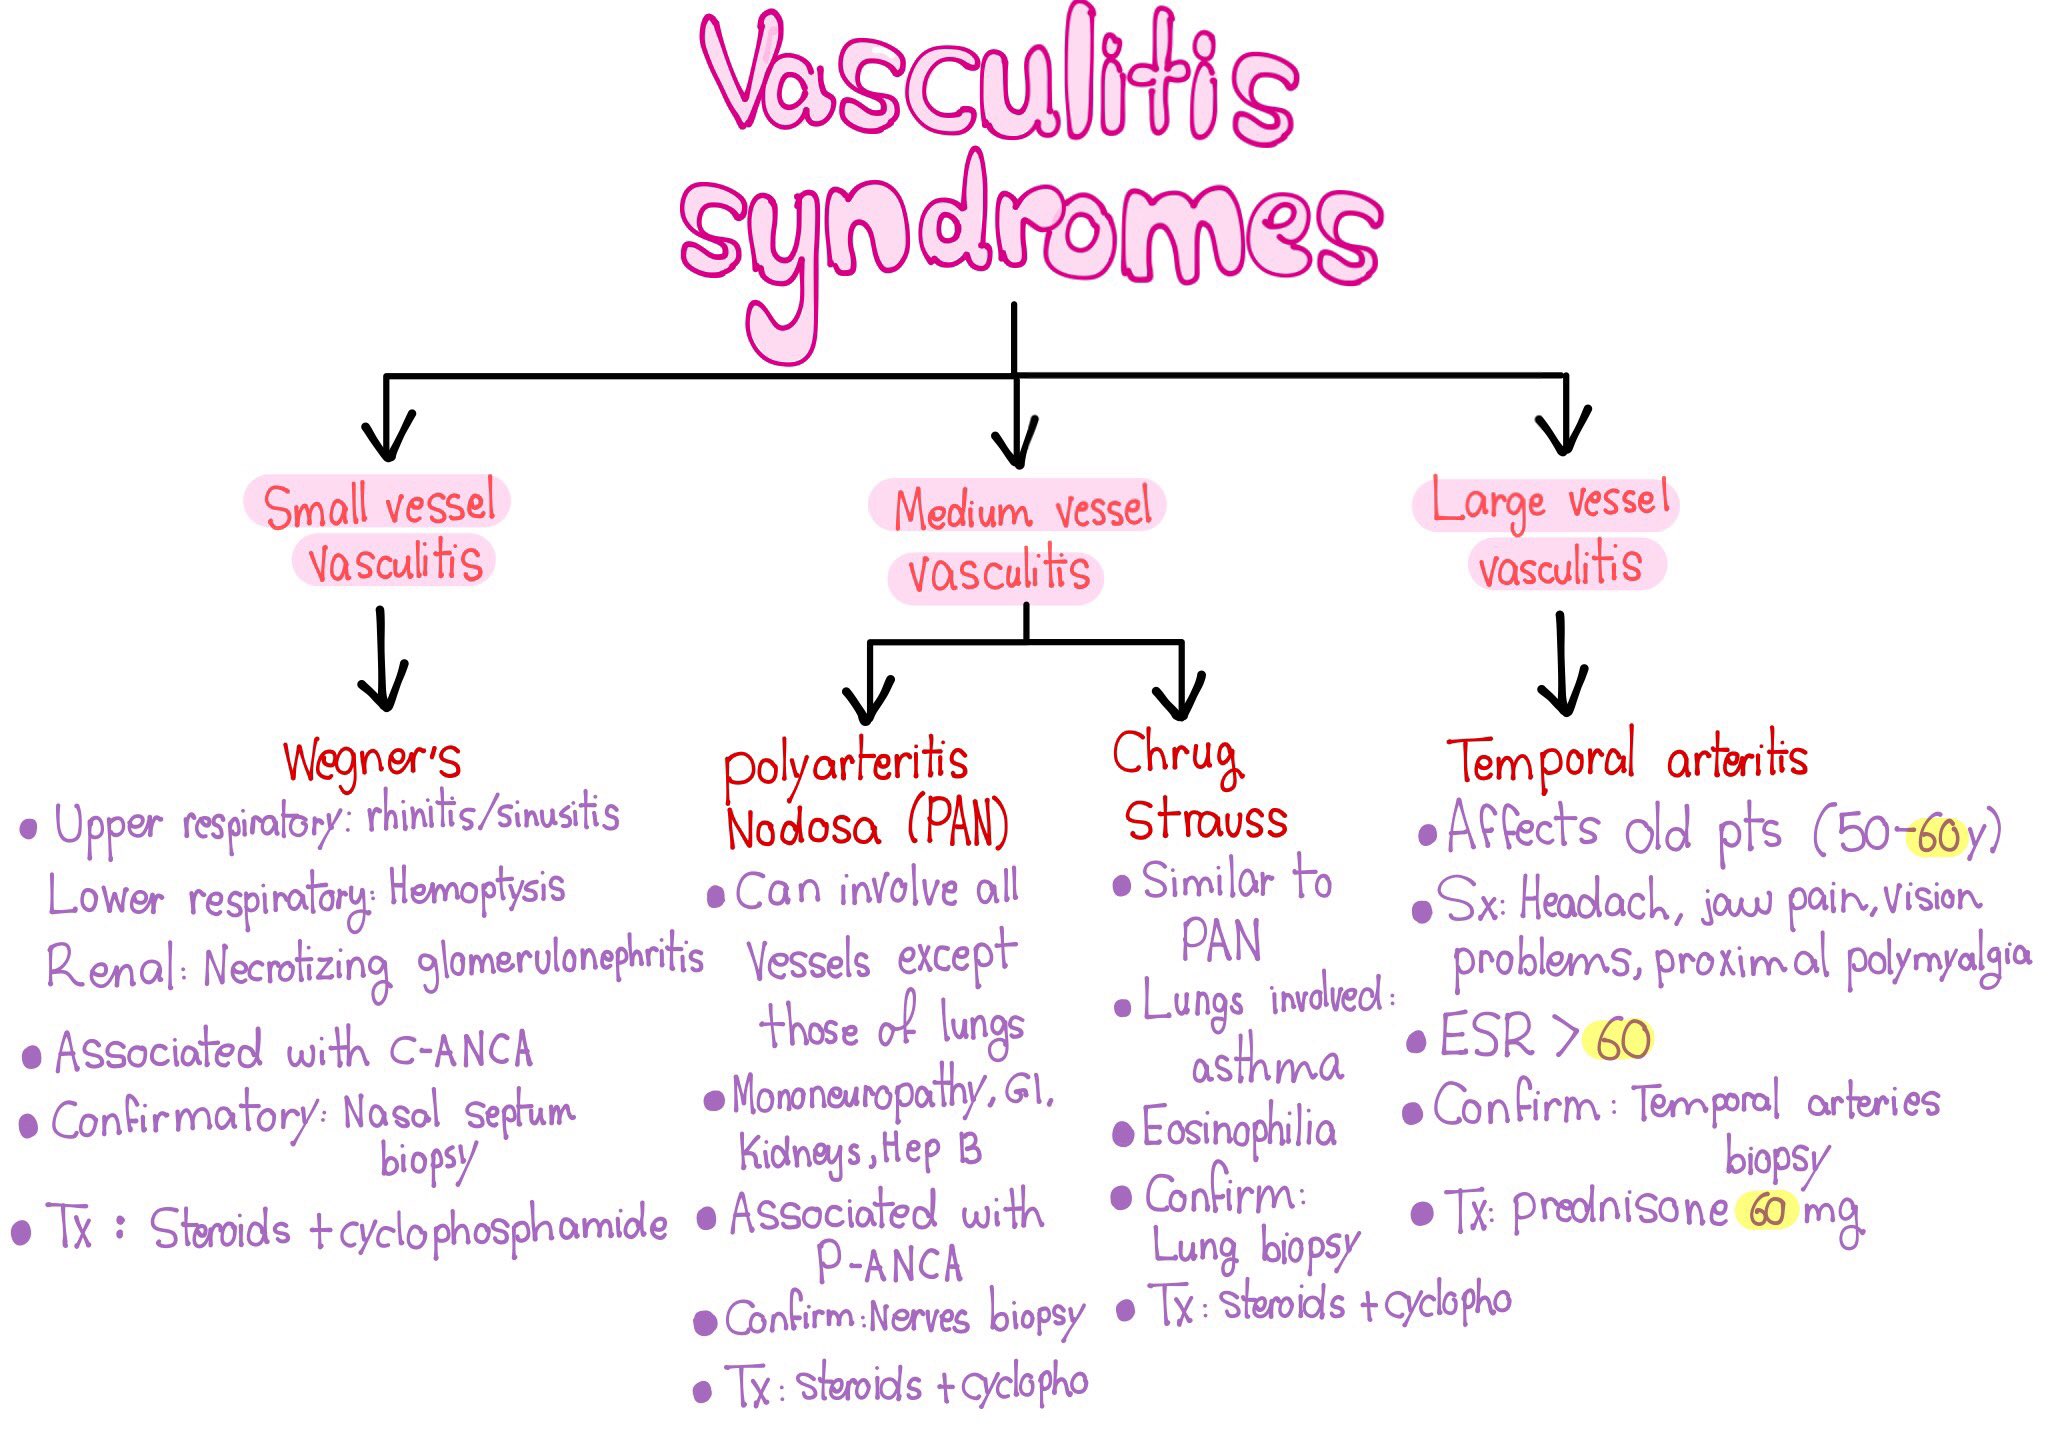 Reumatologia vasculitis